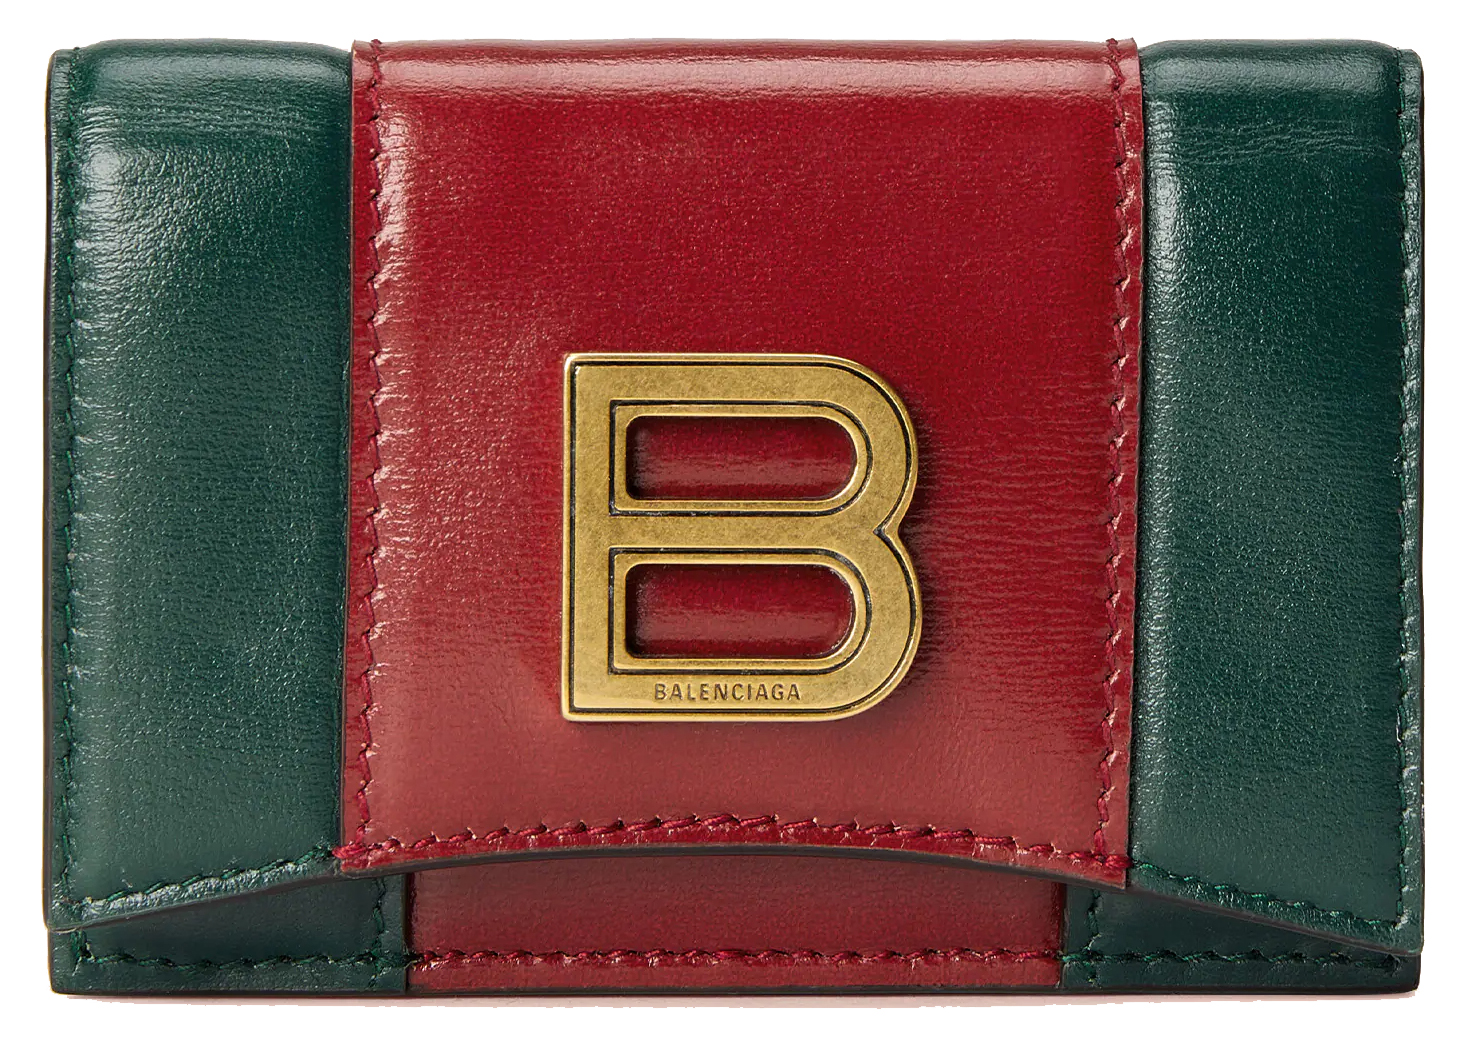 Gucci x Balenciaga The Hacker Project Snap Card Case Wallet Green/Red